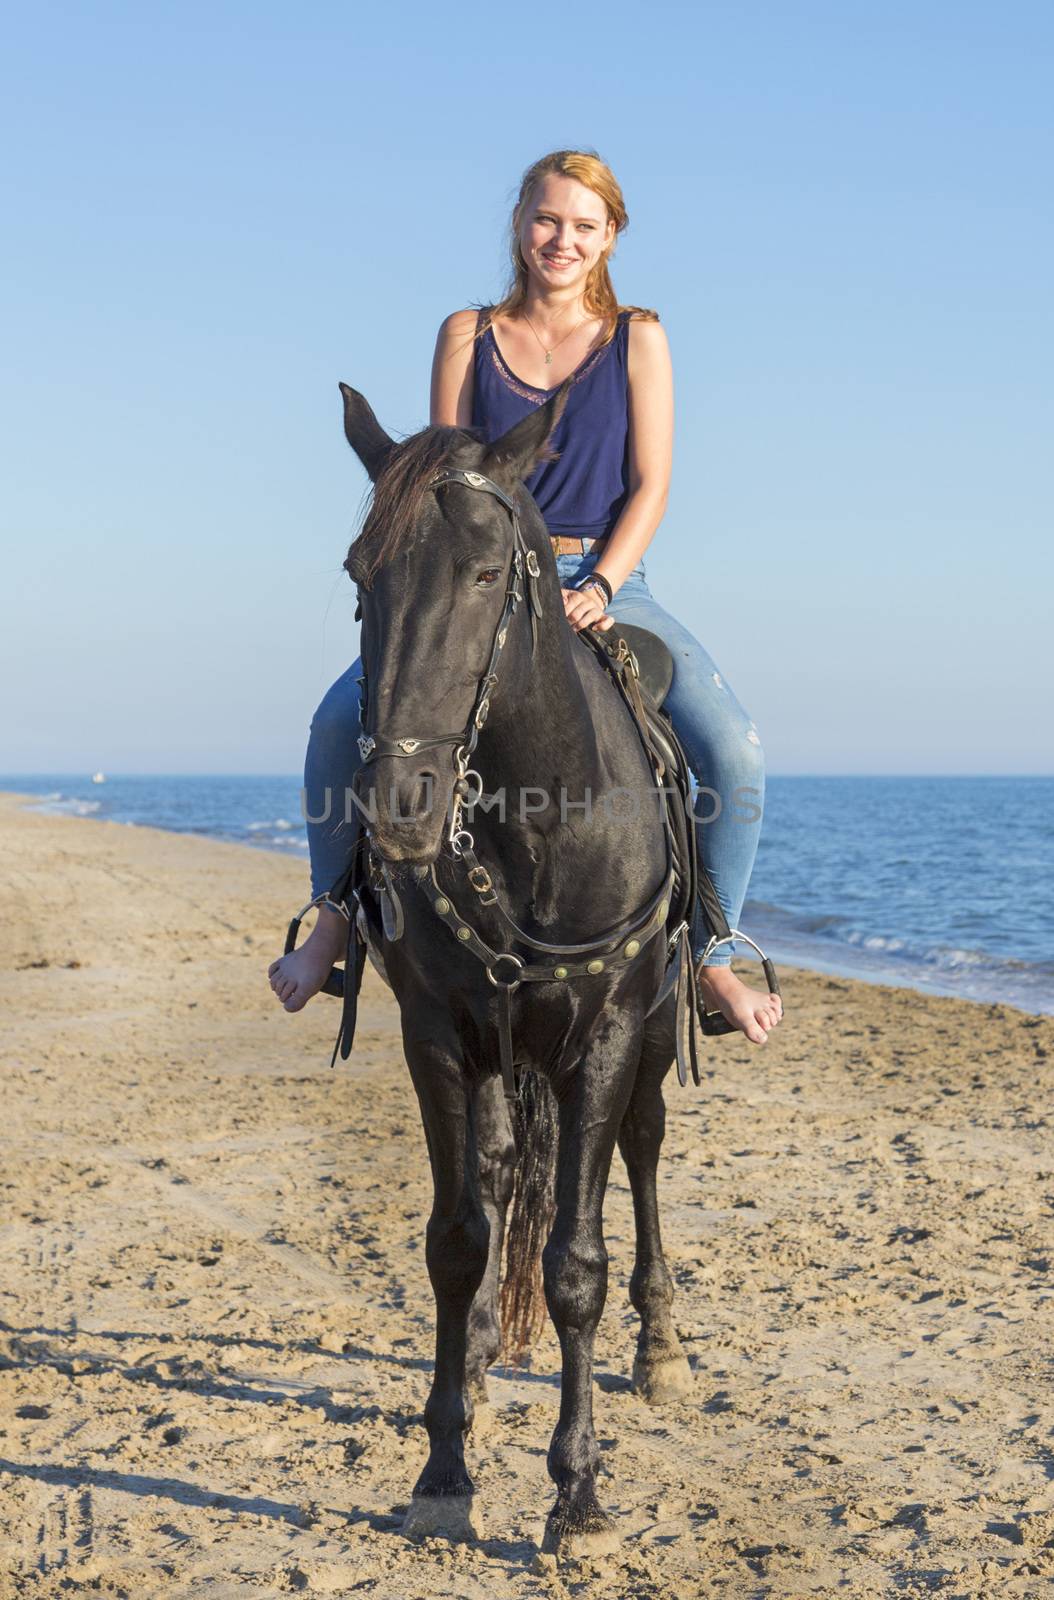 riding girl on the beach by cynoclub